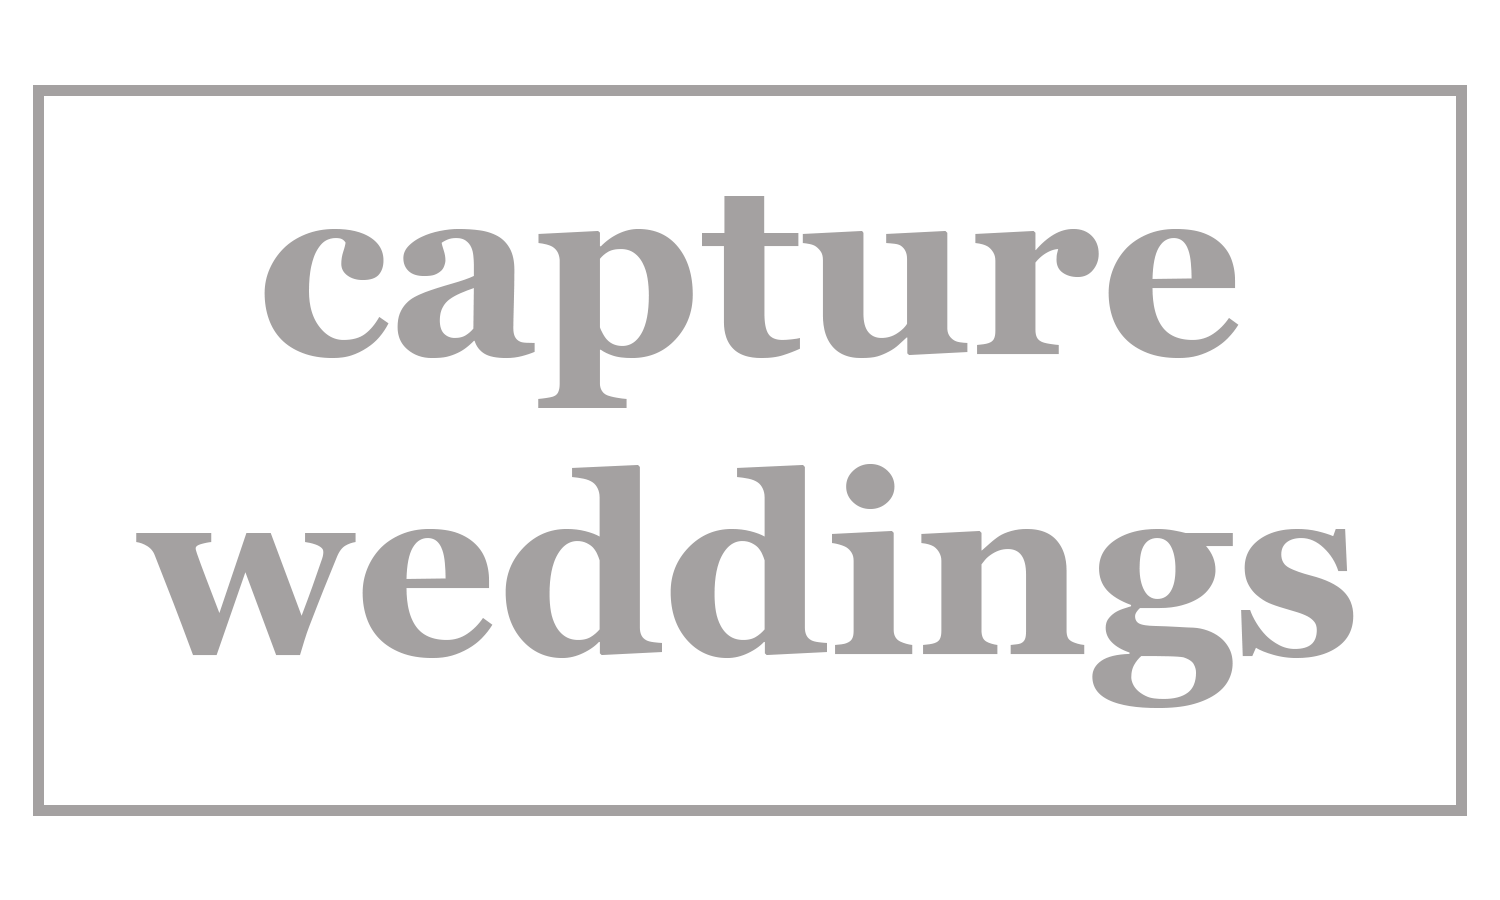 Capture Weddings